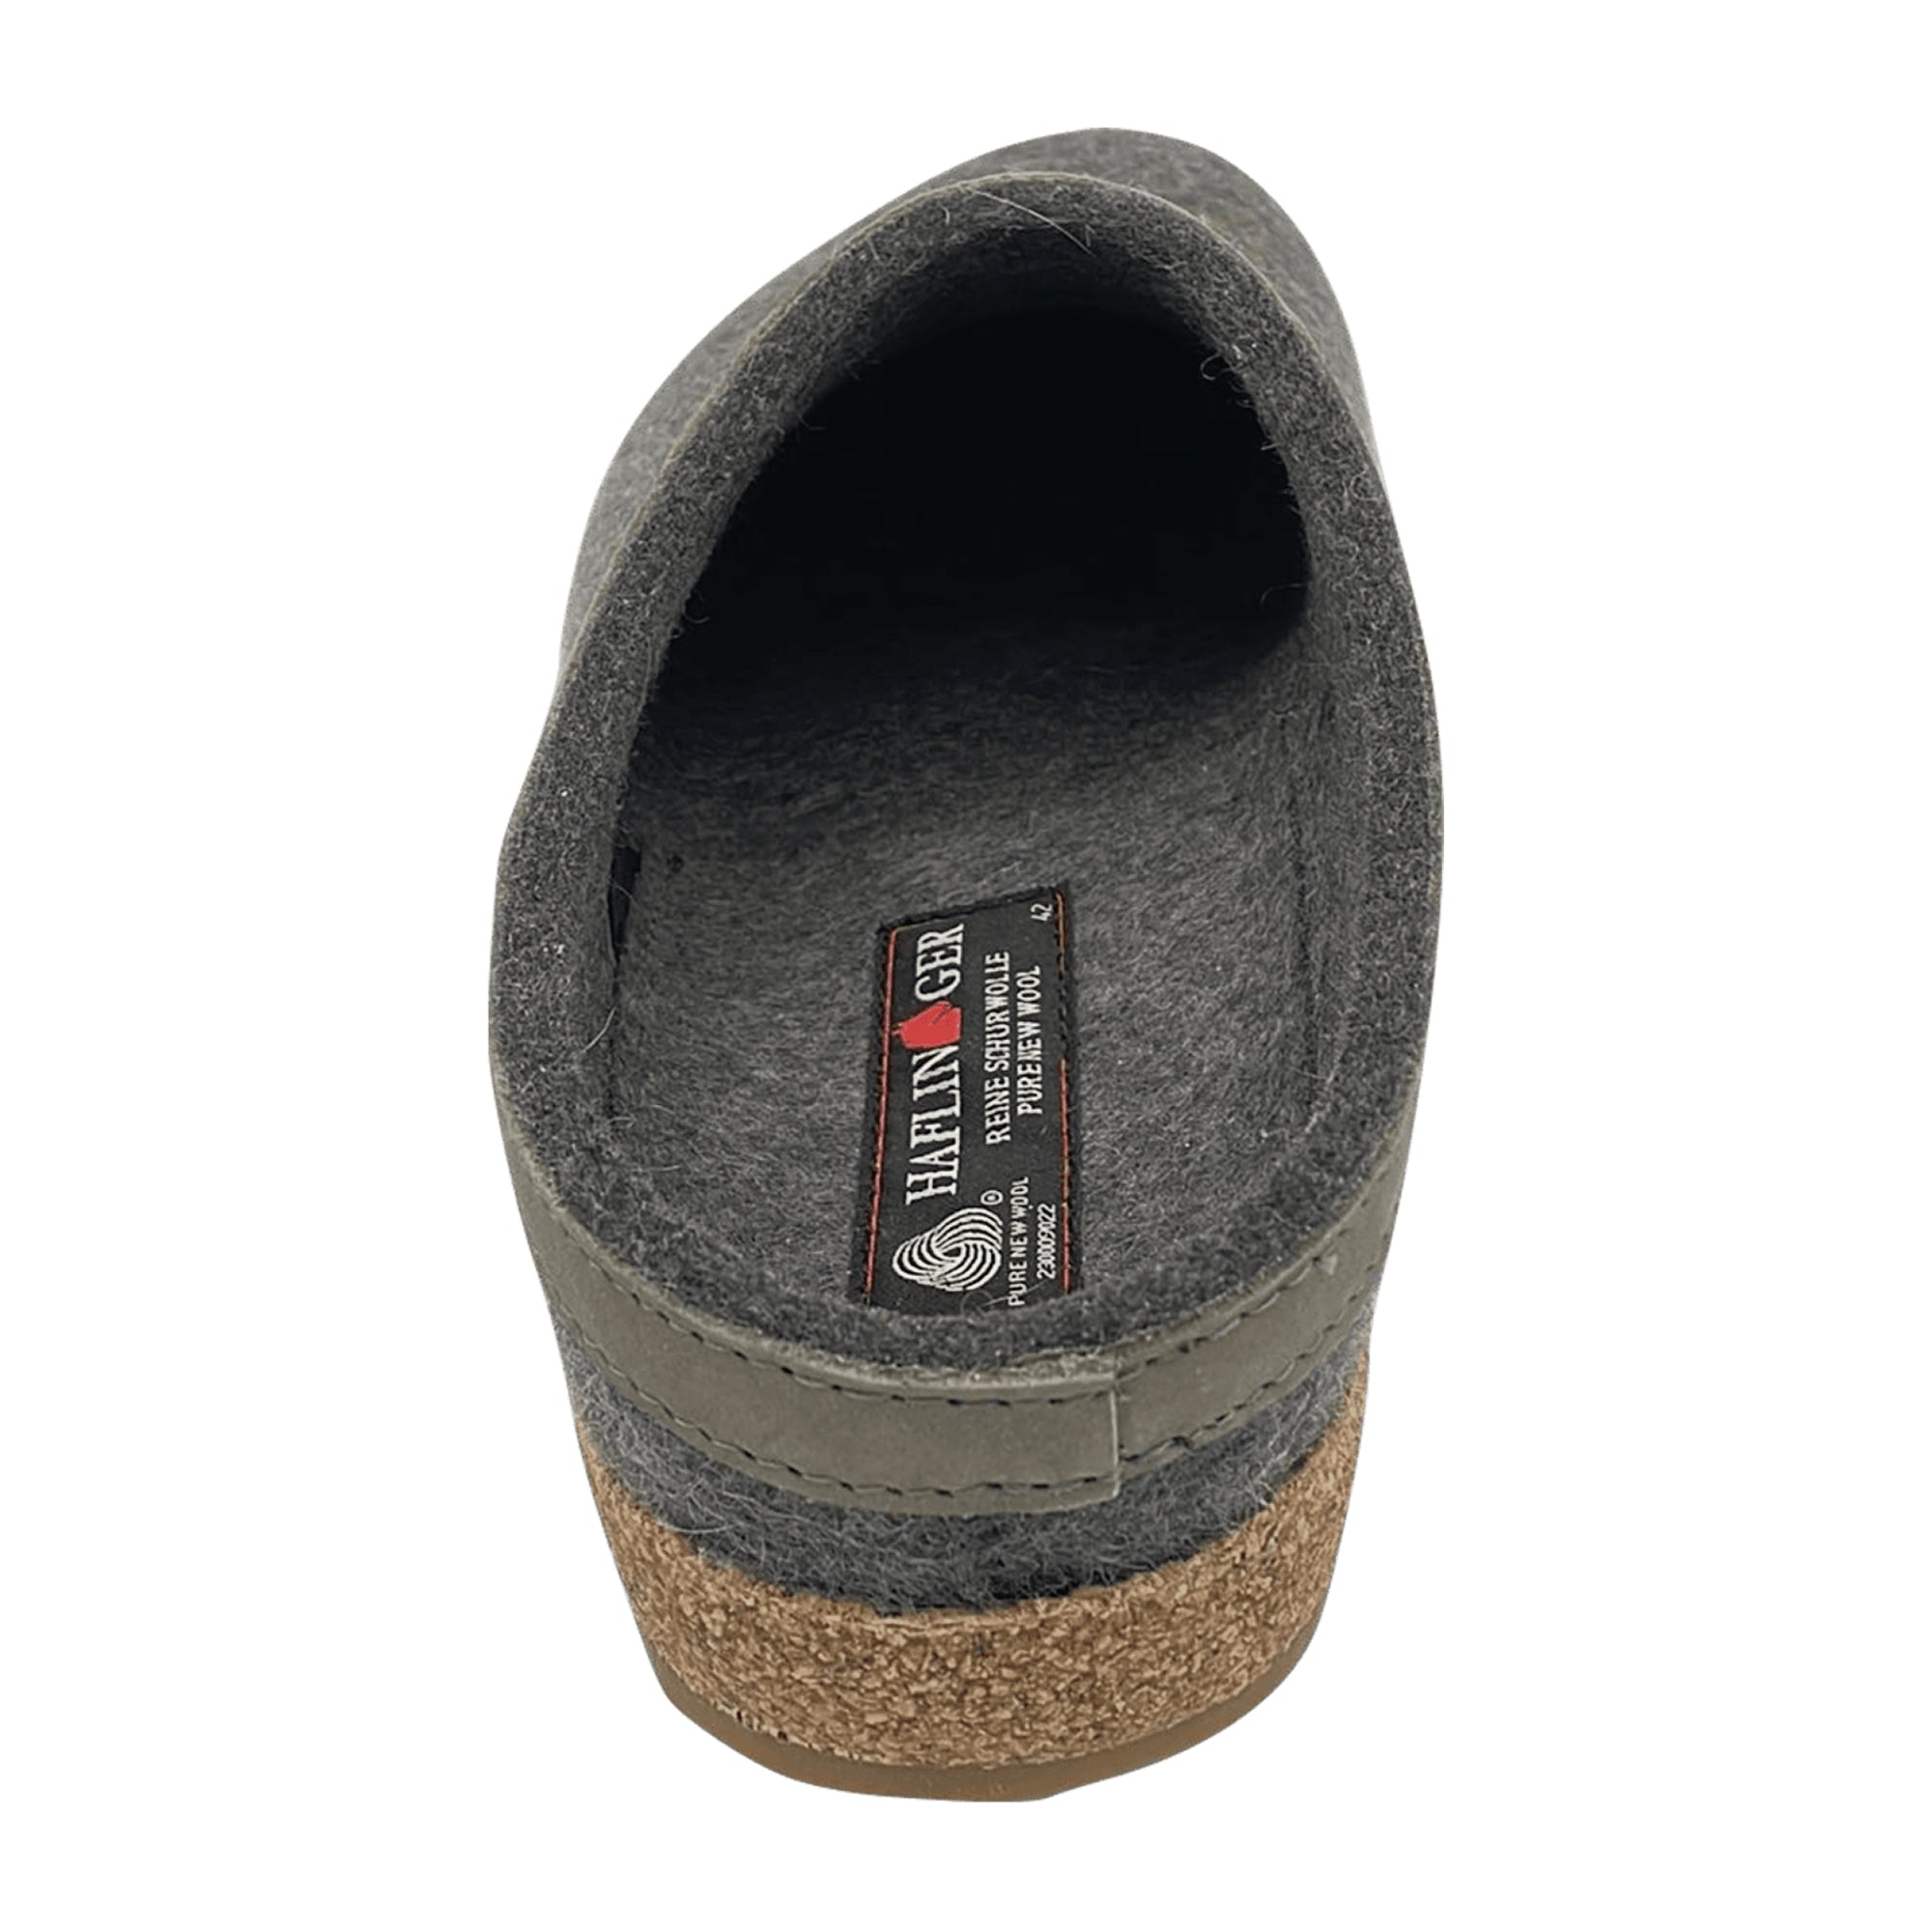 Haflinger 713001 Men's Comfortable Wool Slippers, Grey